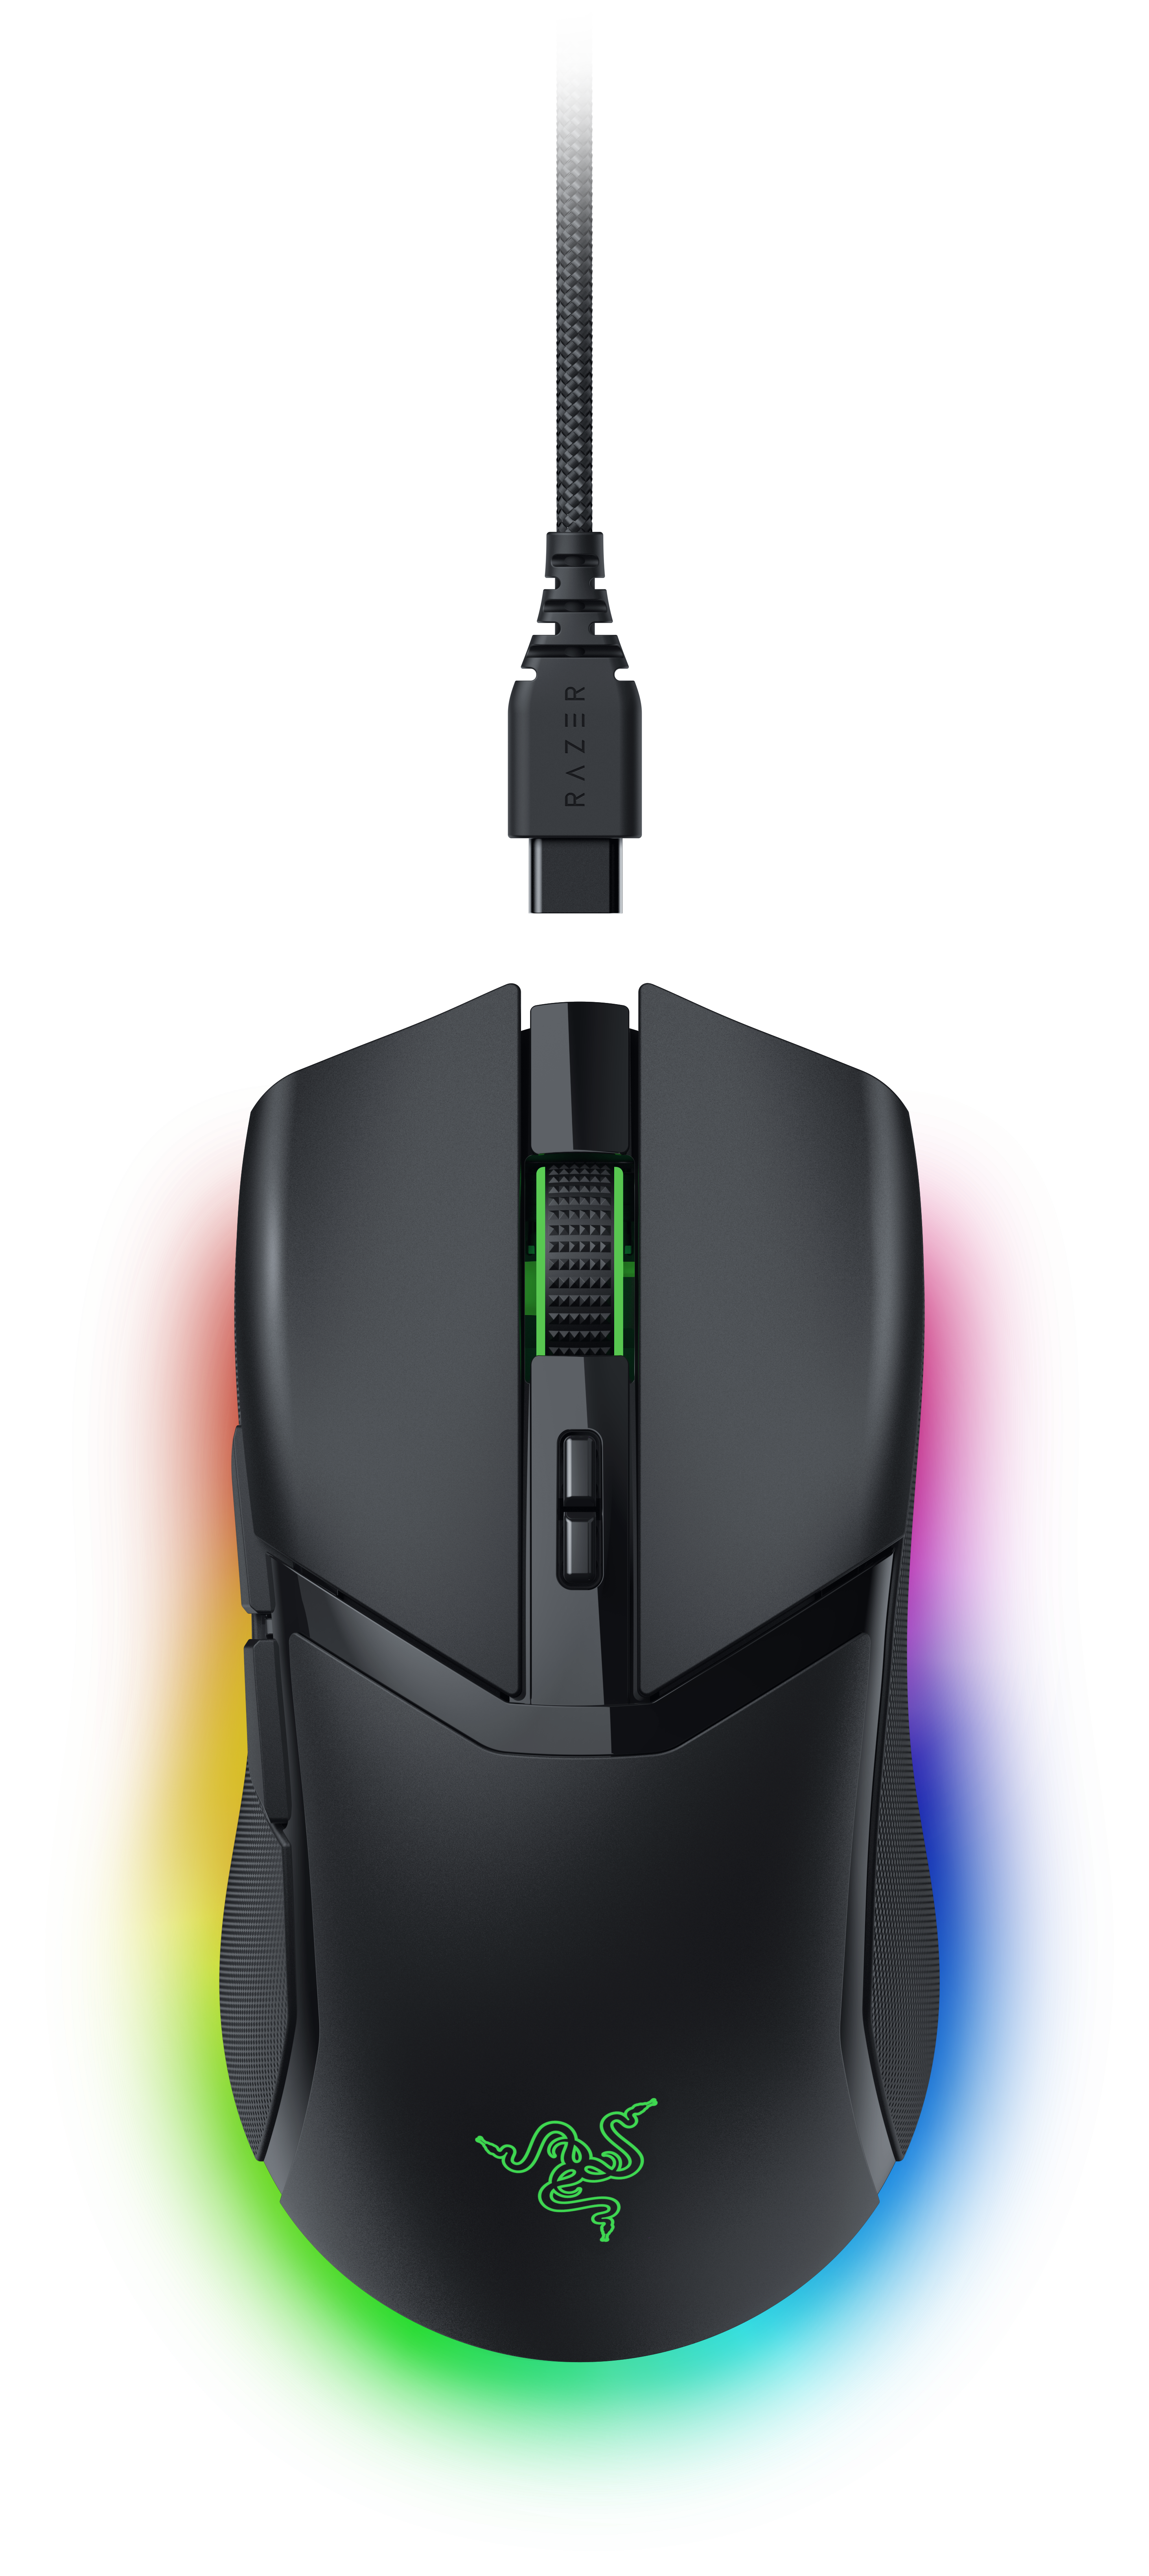 Razer Cobra Pro Lightweight Wireless Gaming Mouse with Razer Chroma RGB -  Black